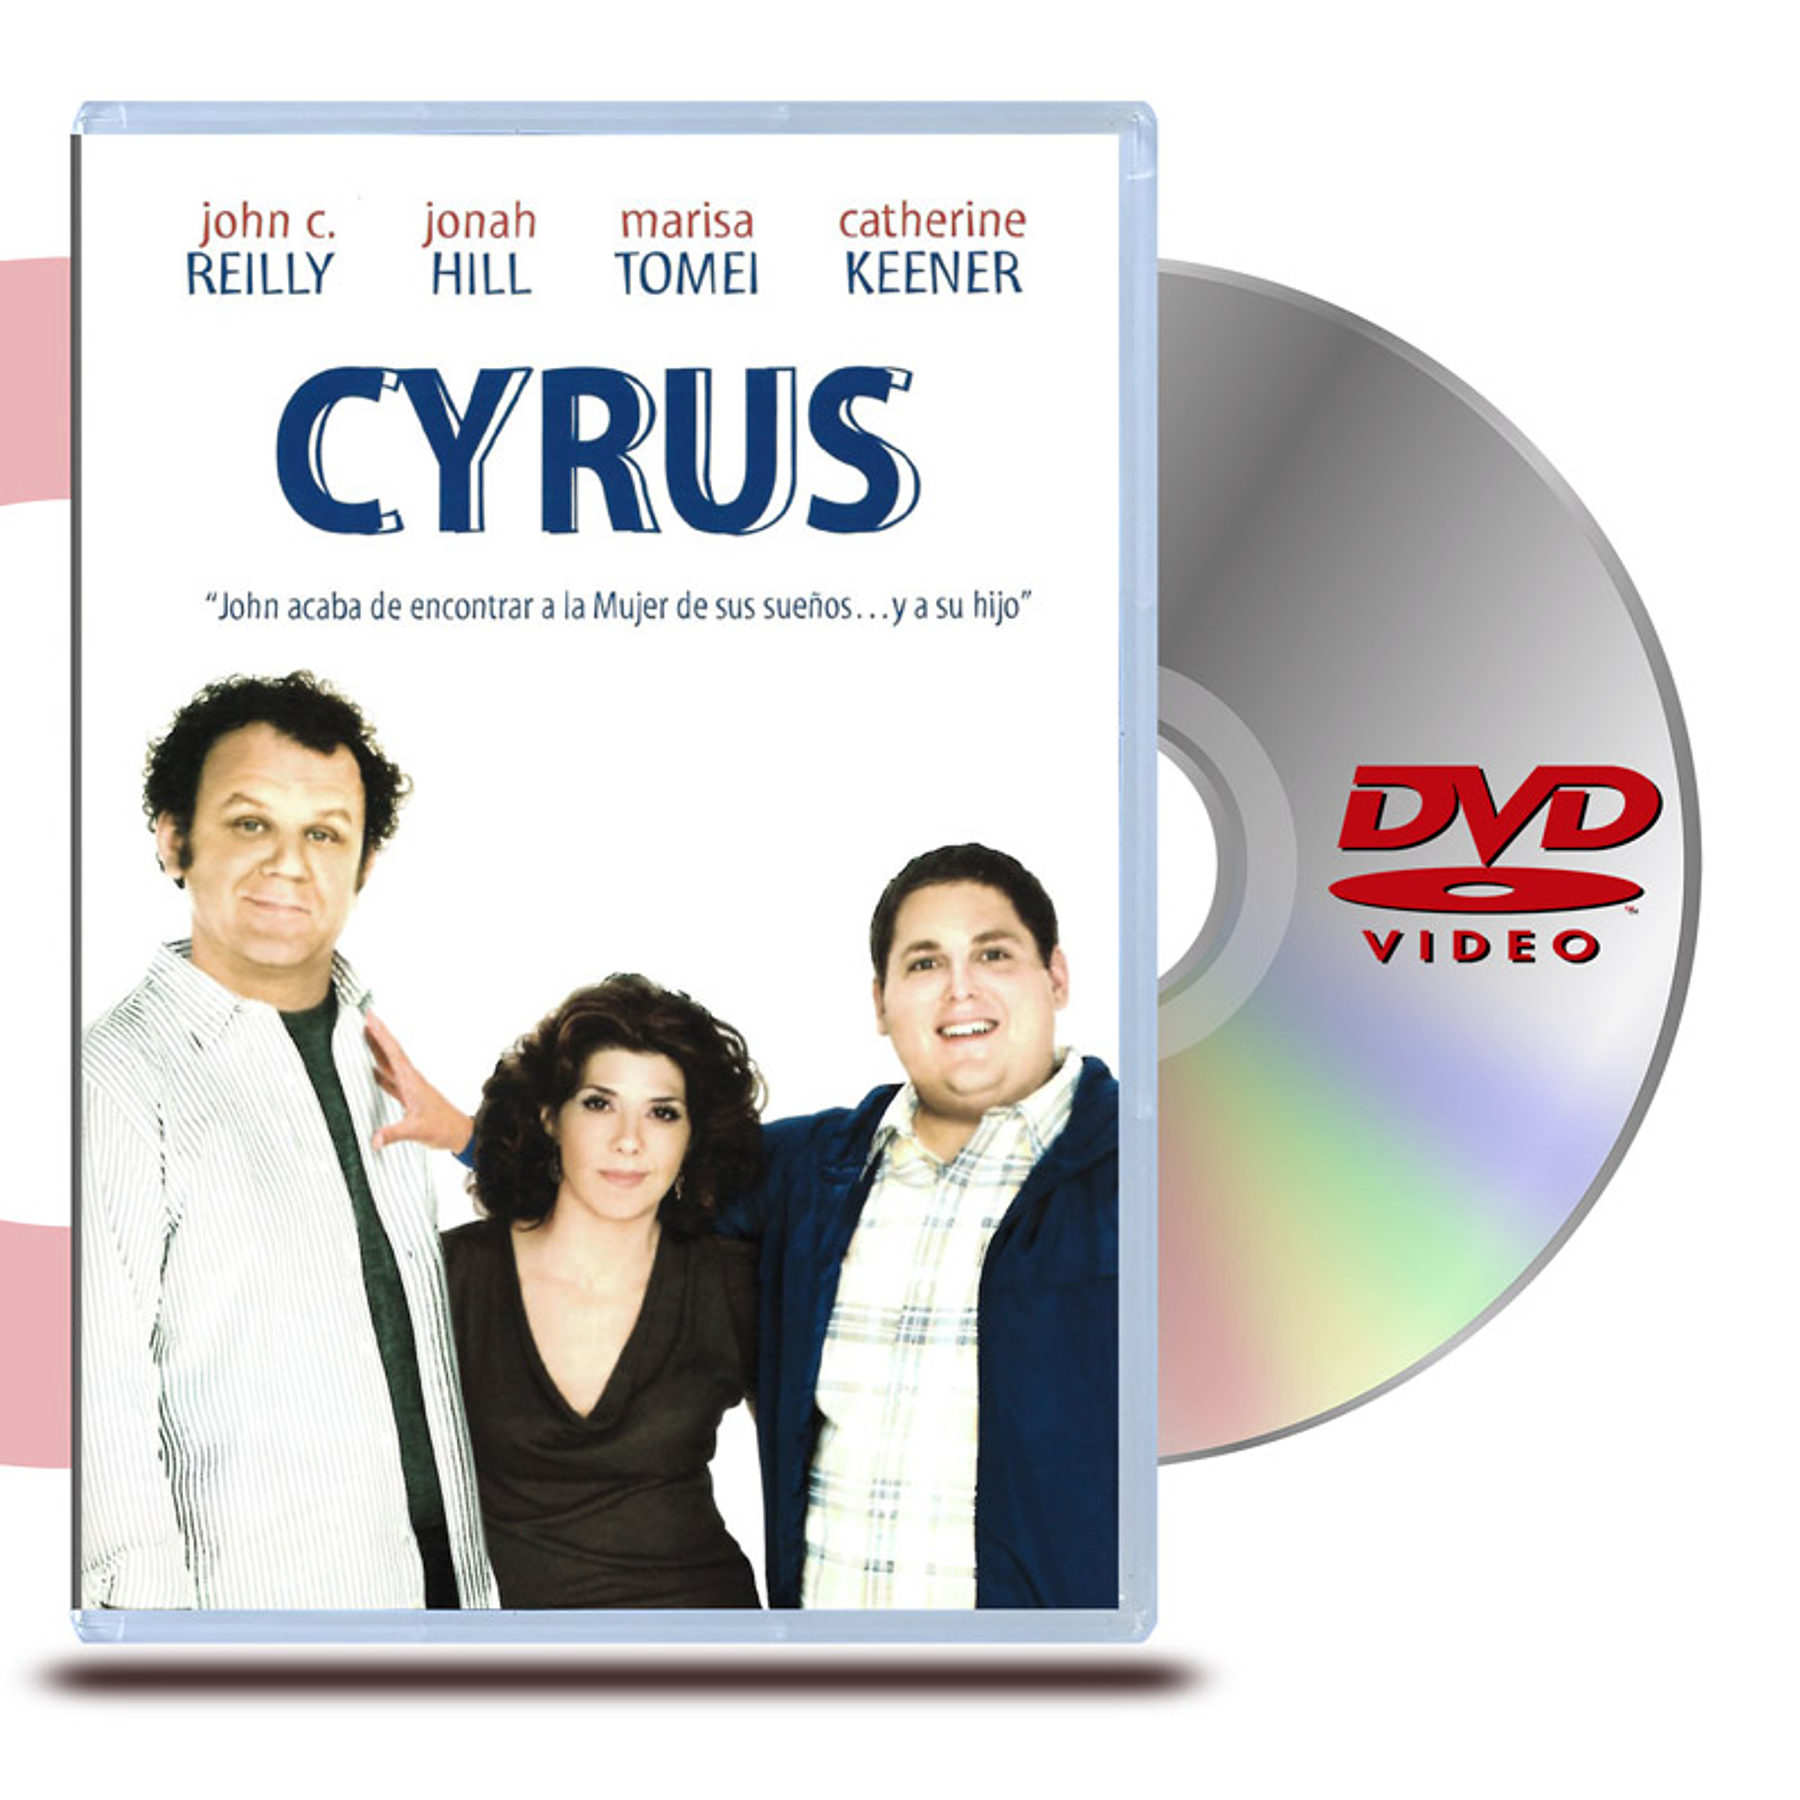 DVD CYRUS